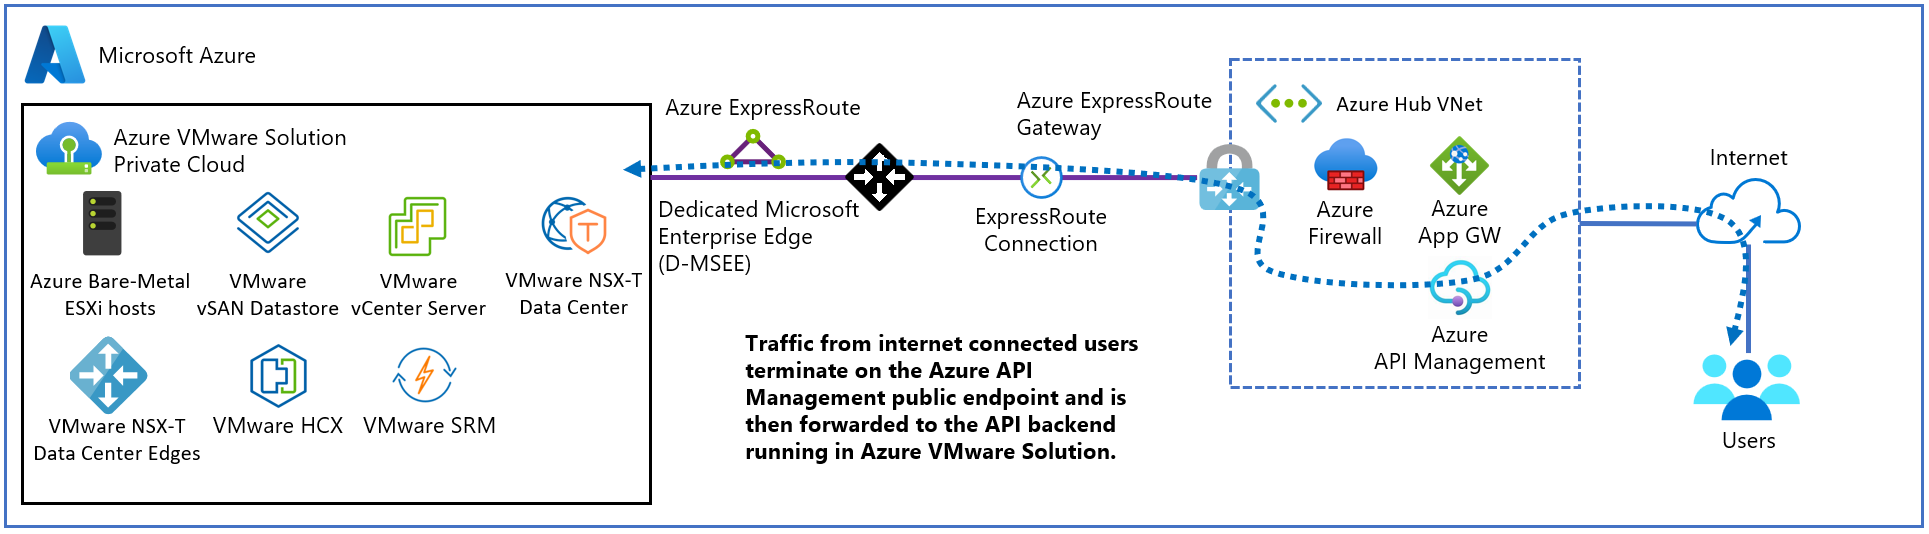 Diagram showing an external API Management deployment for Azure VMware Solution